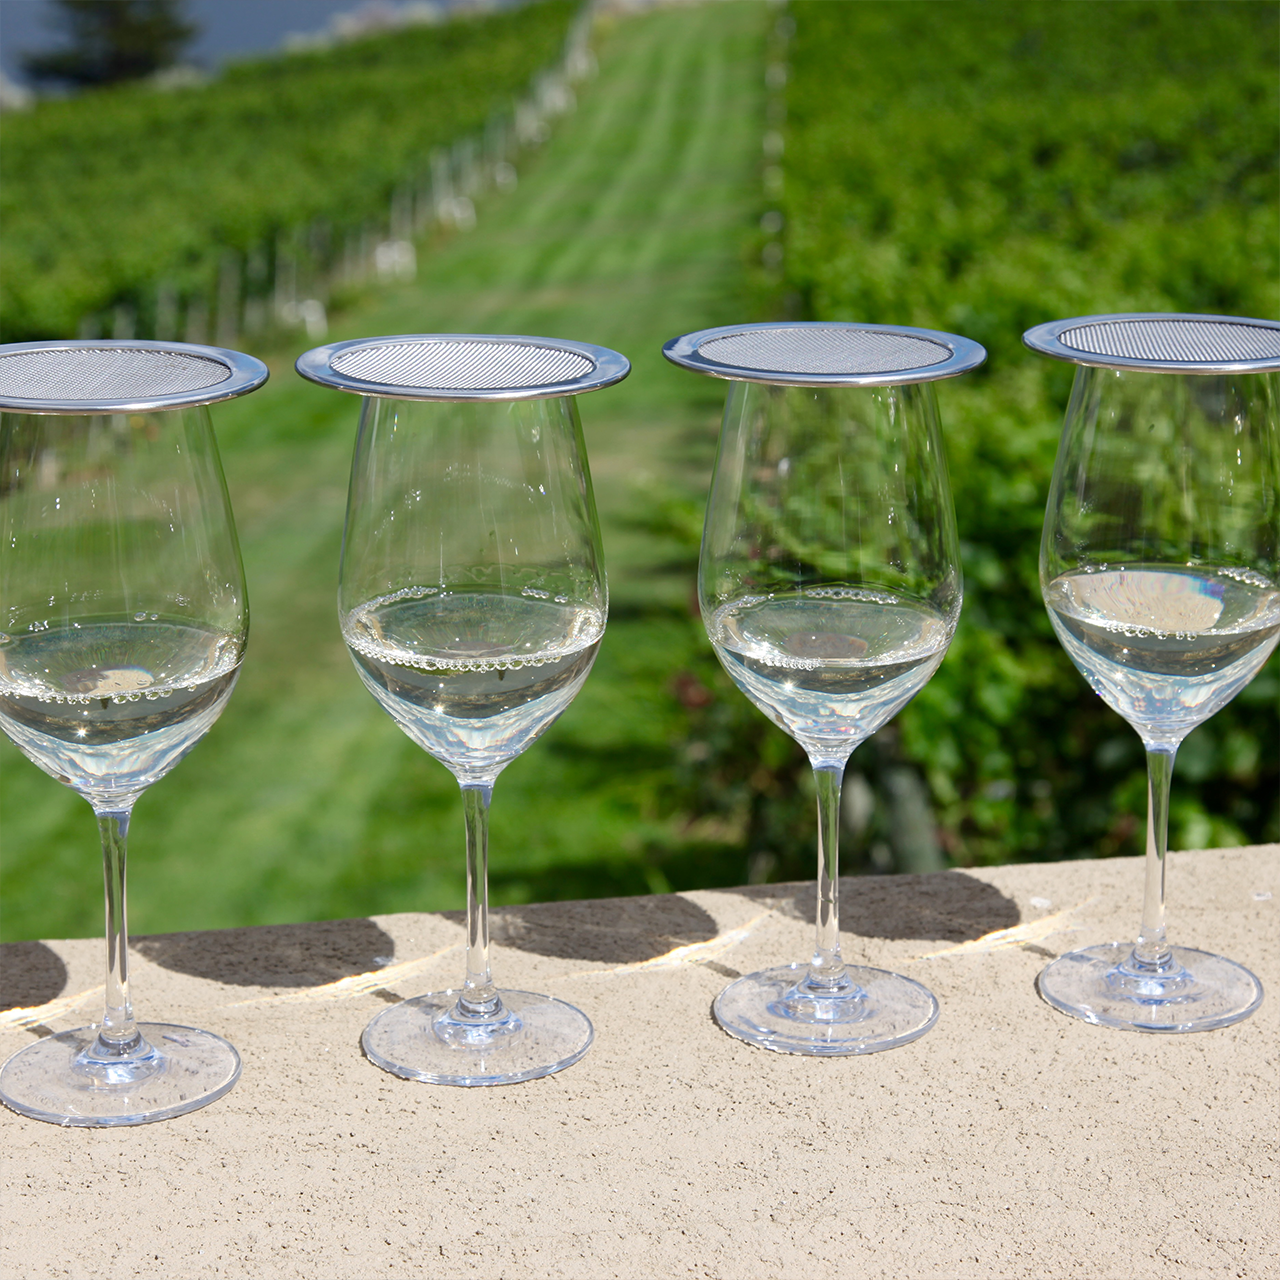 WineGuard, The Wine Glass Cover Company